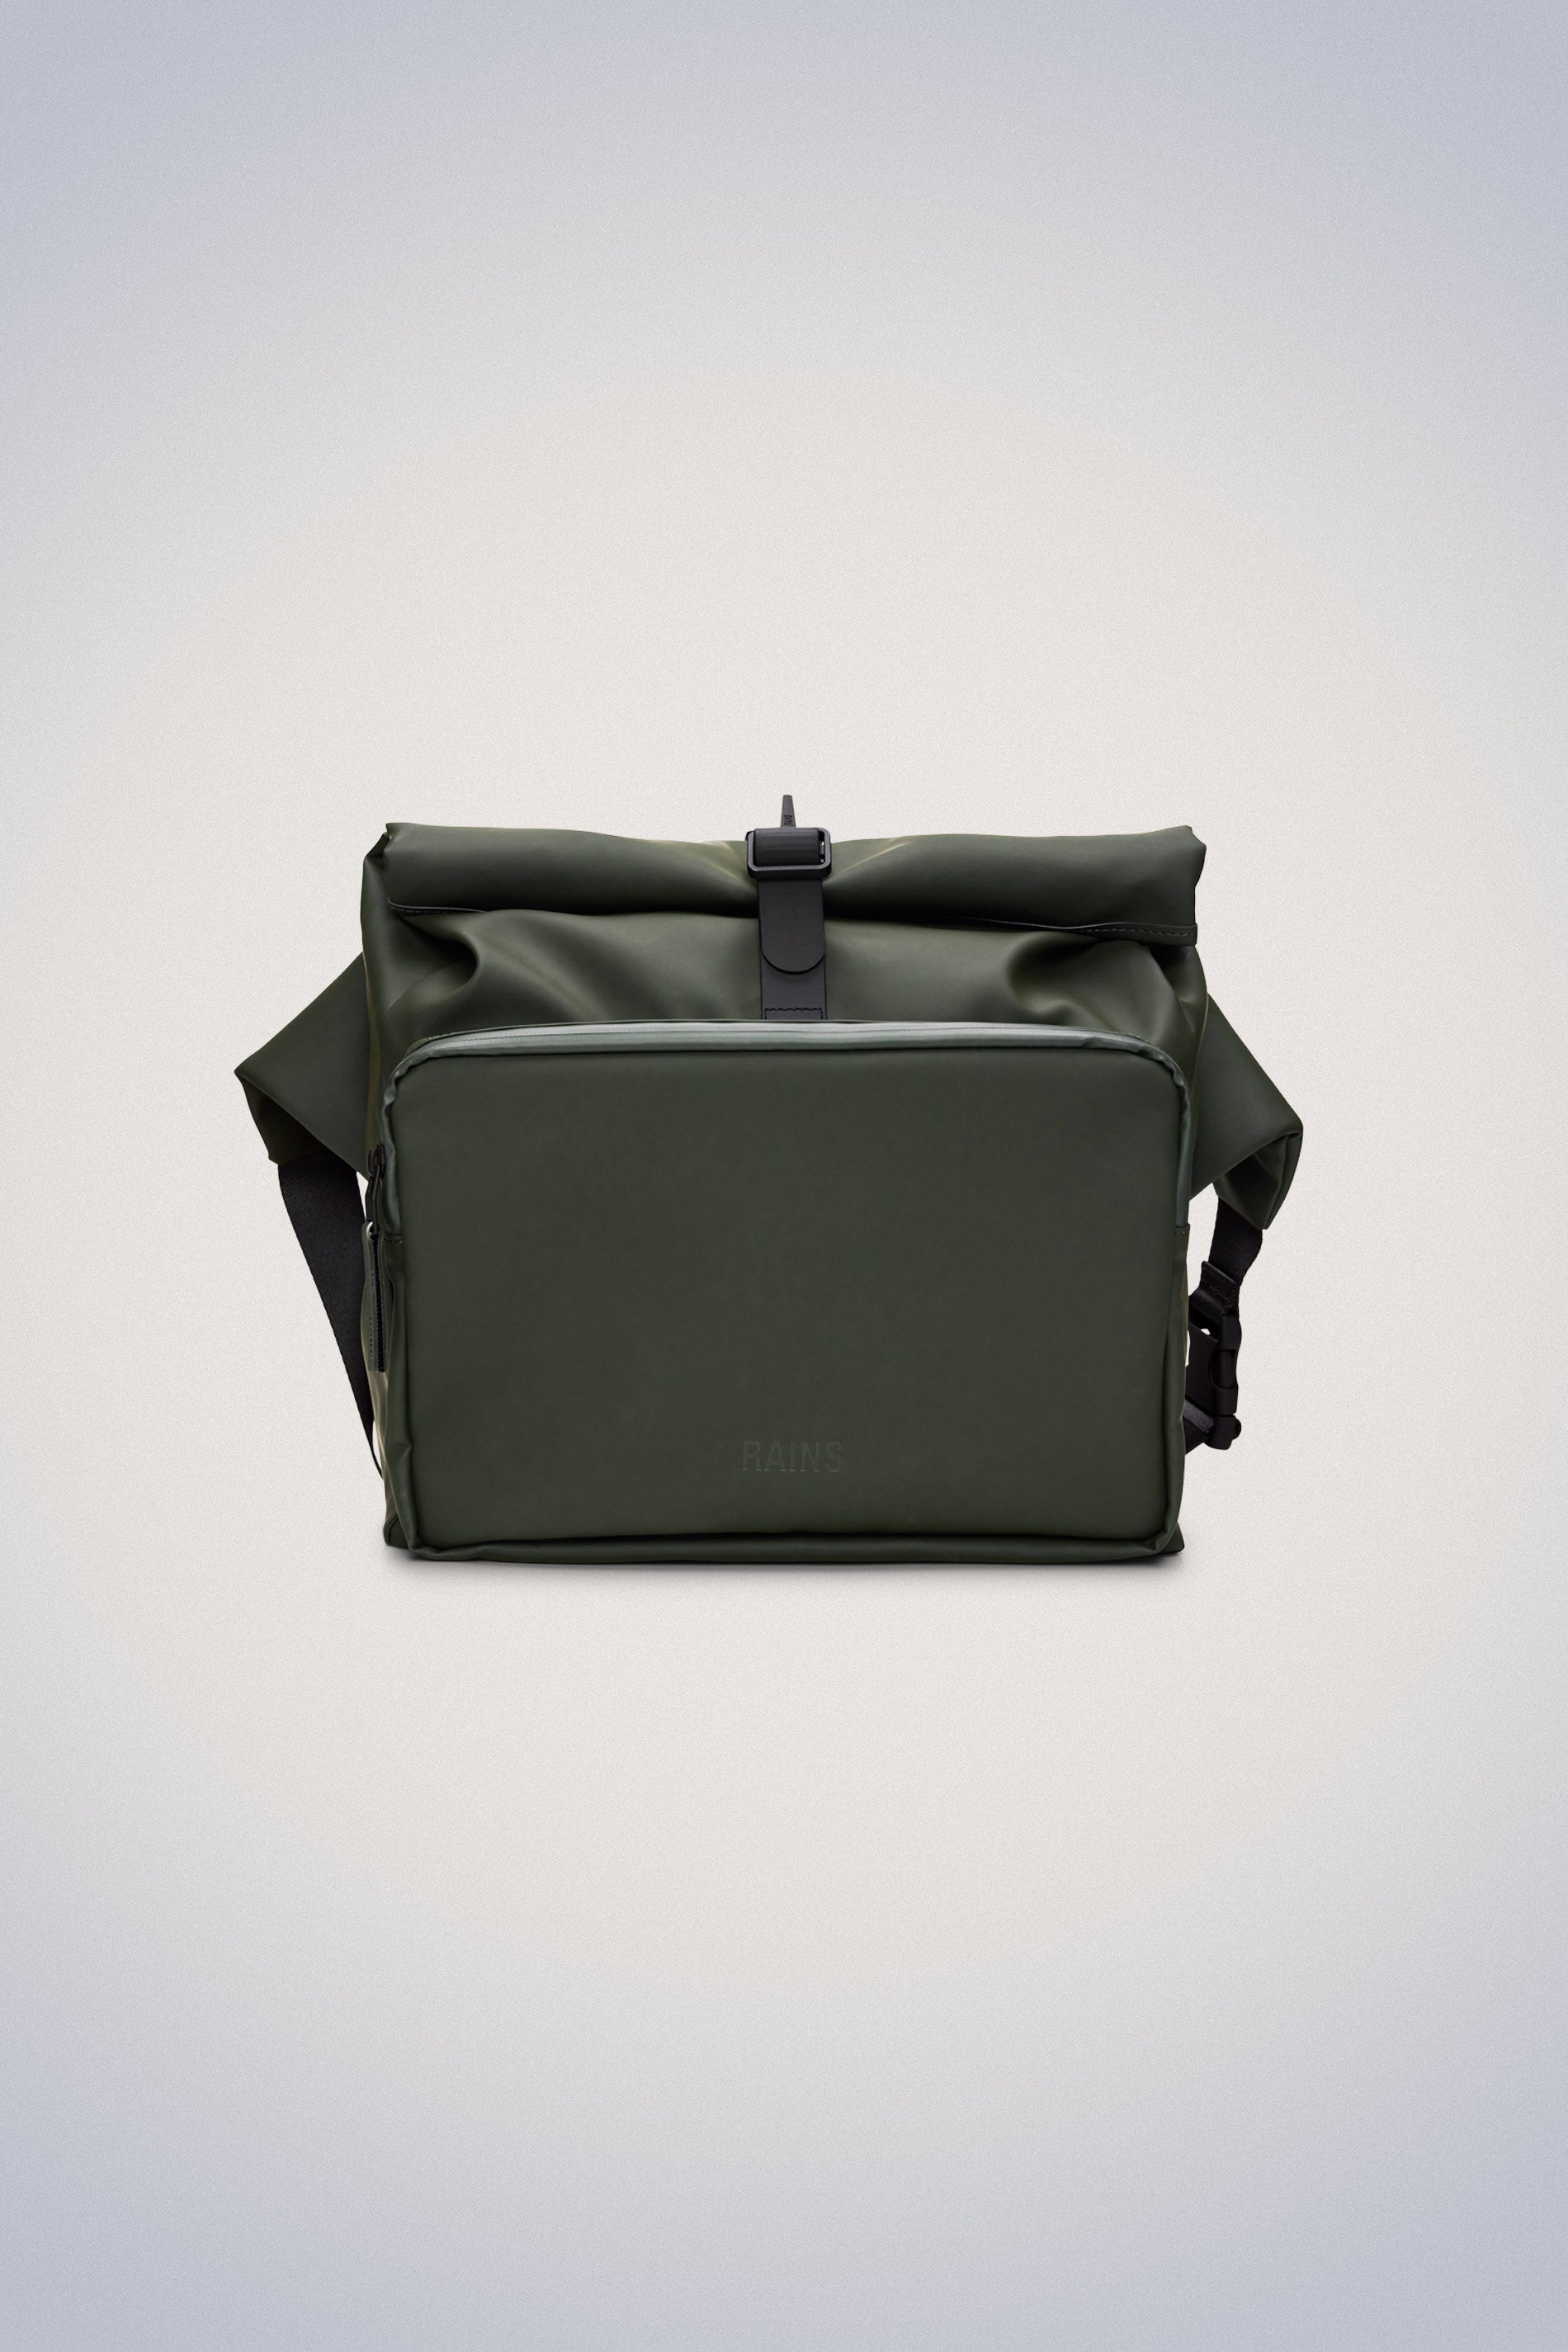 【Aer】 Cmmuter Bag (BEAUTY\u0026YOUTH 別注)backpack